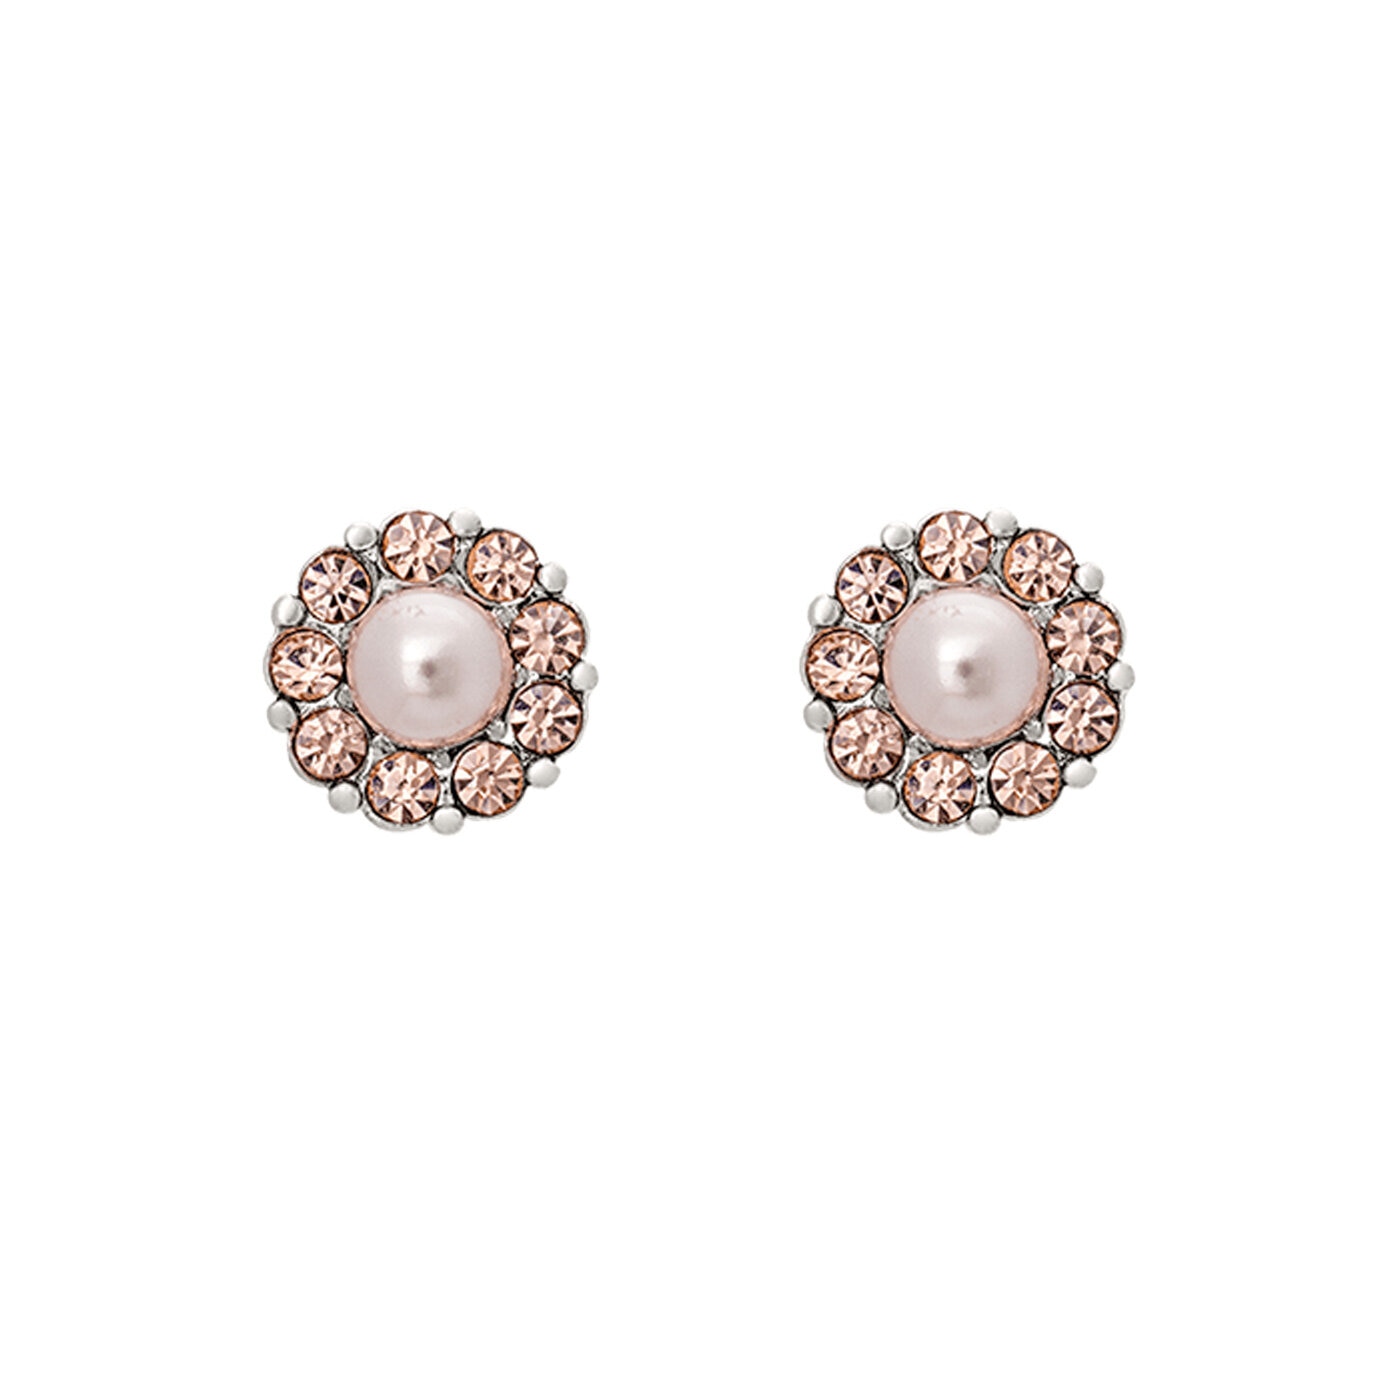 Petite Miss Sofia pearl earrings - Rosaline